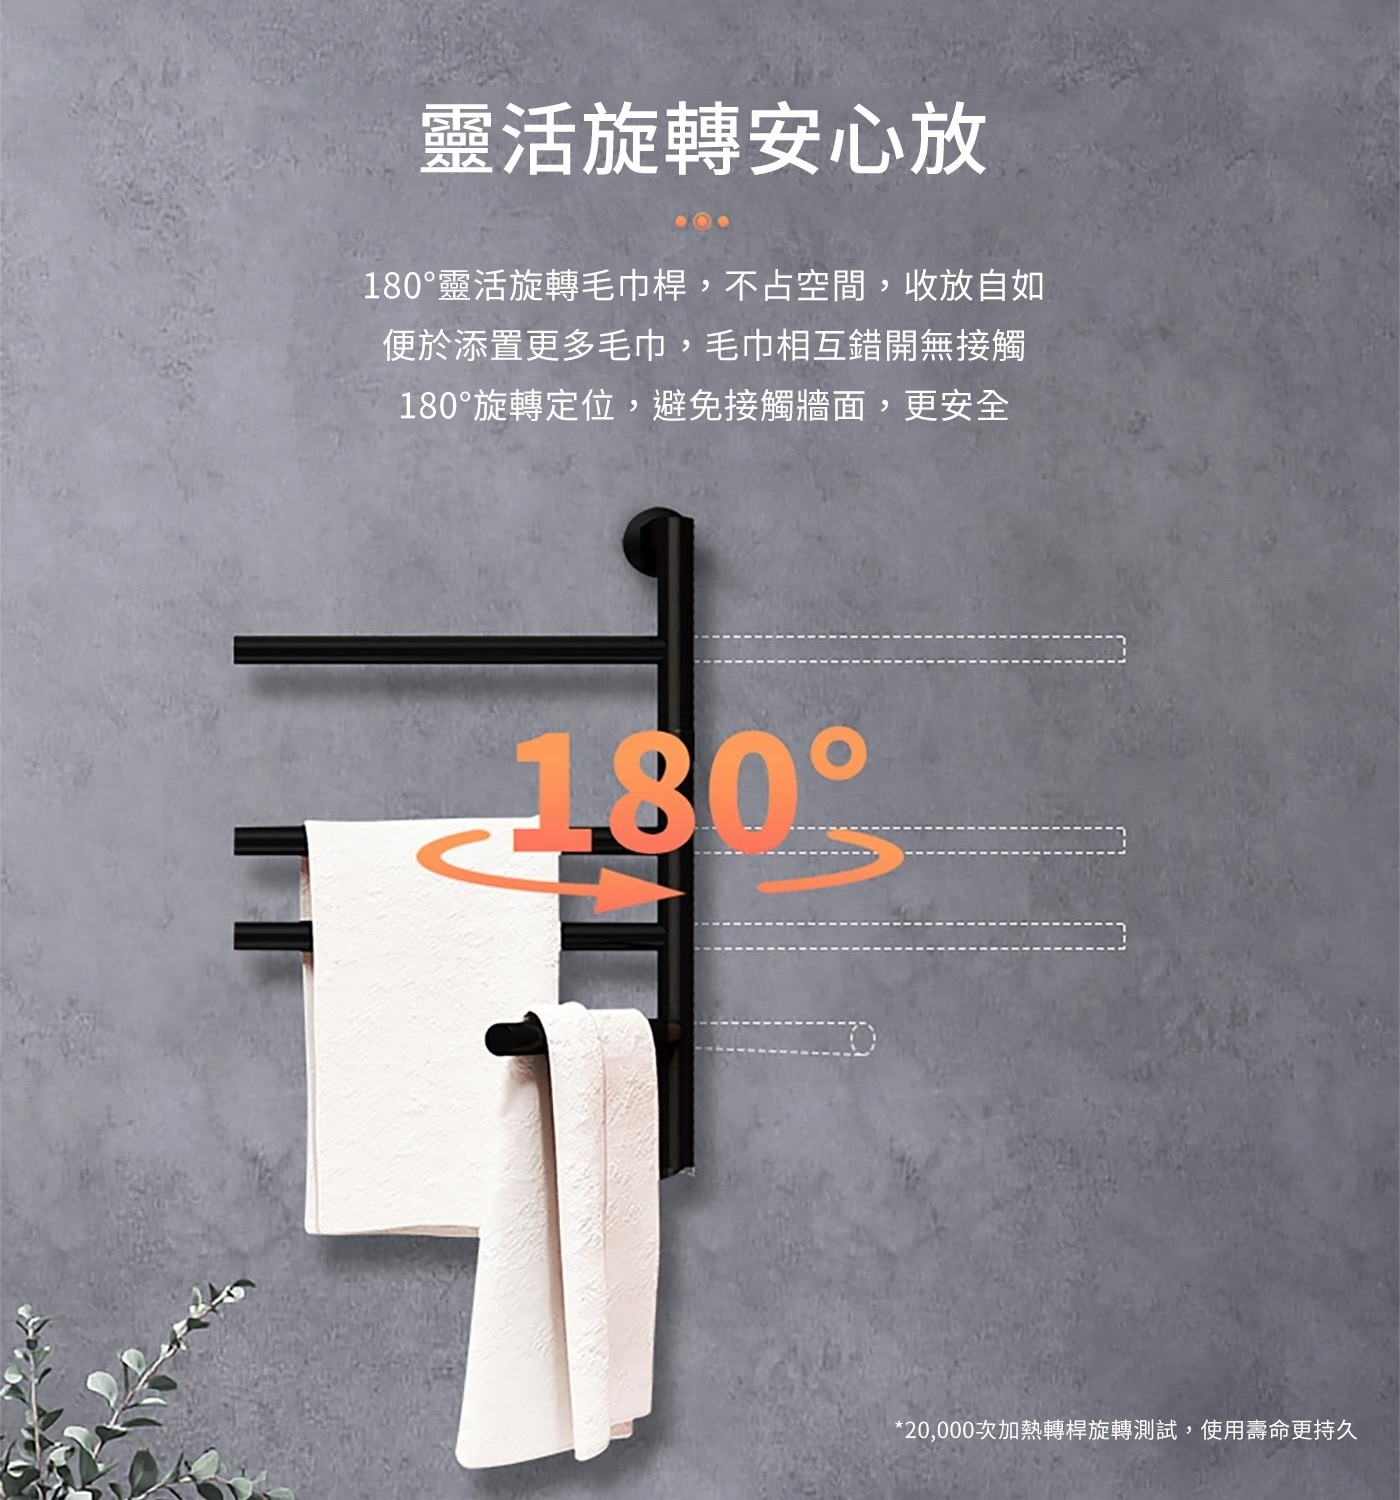 Kohler 電熱毛巾架 110V 產品介紹